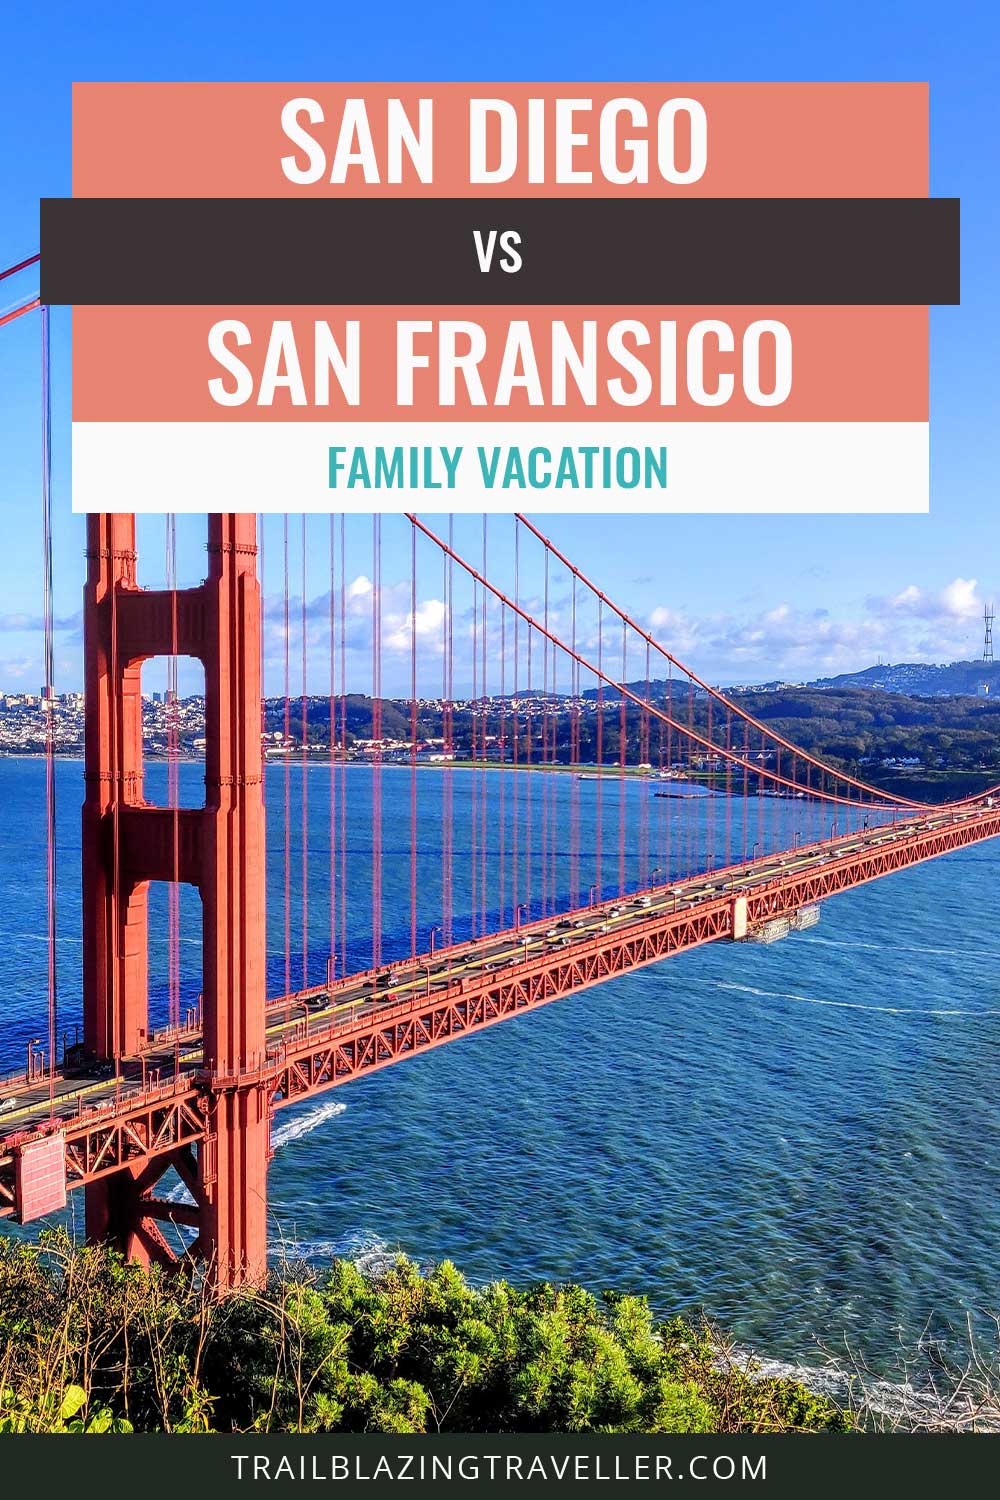 The golden gate bridge - San Diego vs. San Francisco Family Vacation.